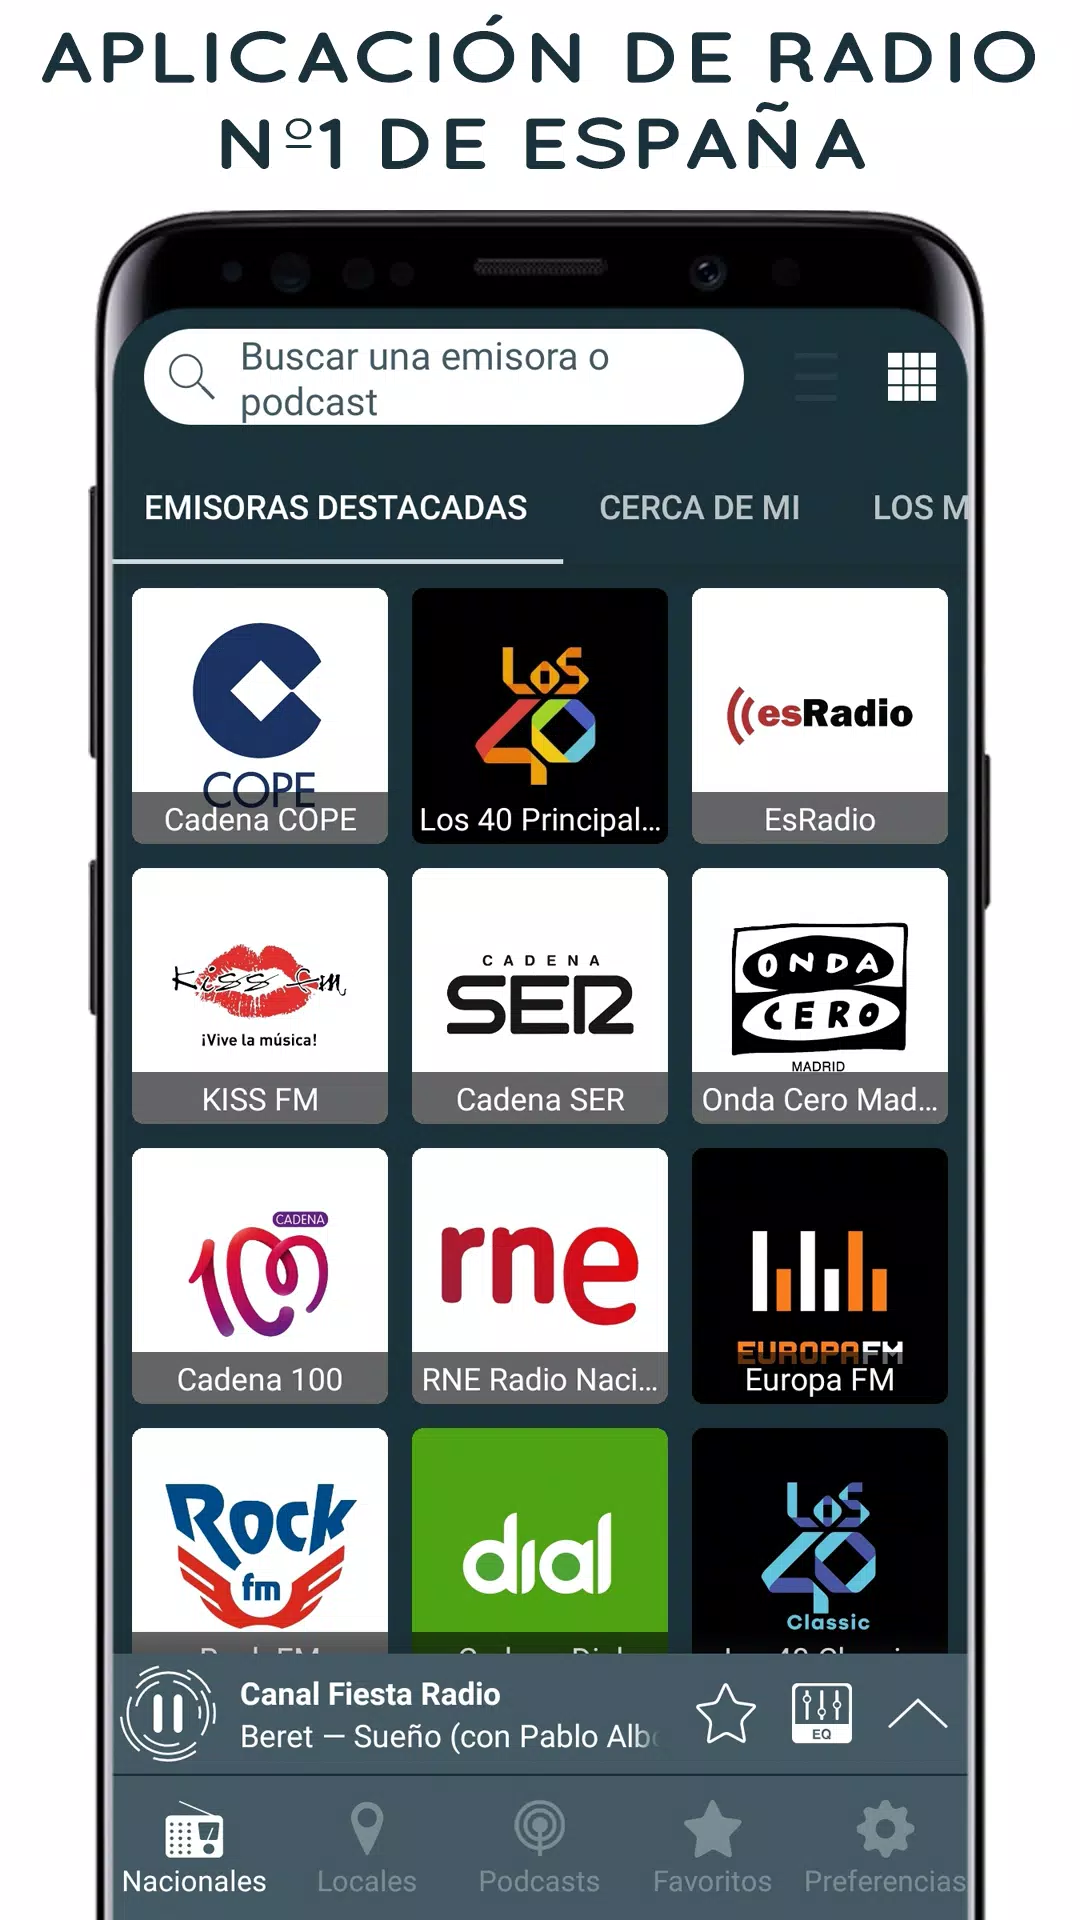 Radio España for Android - APK Download